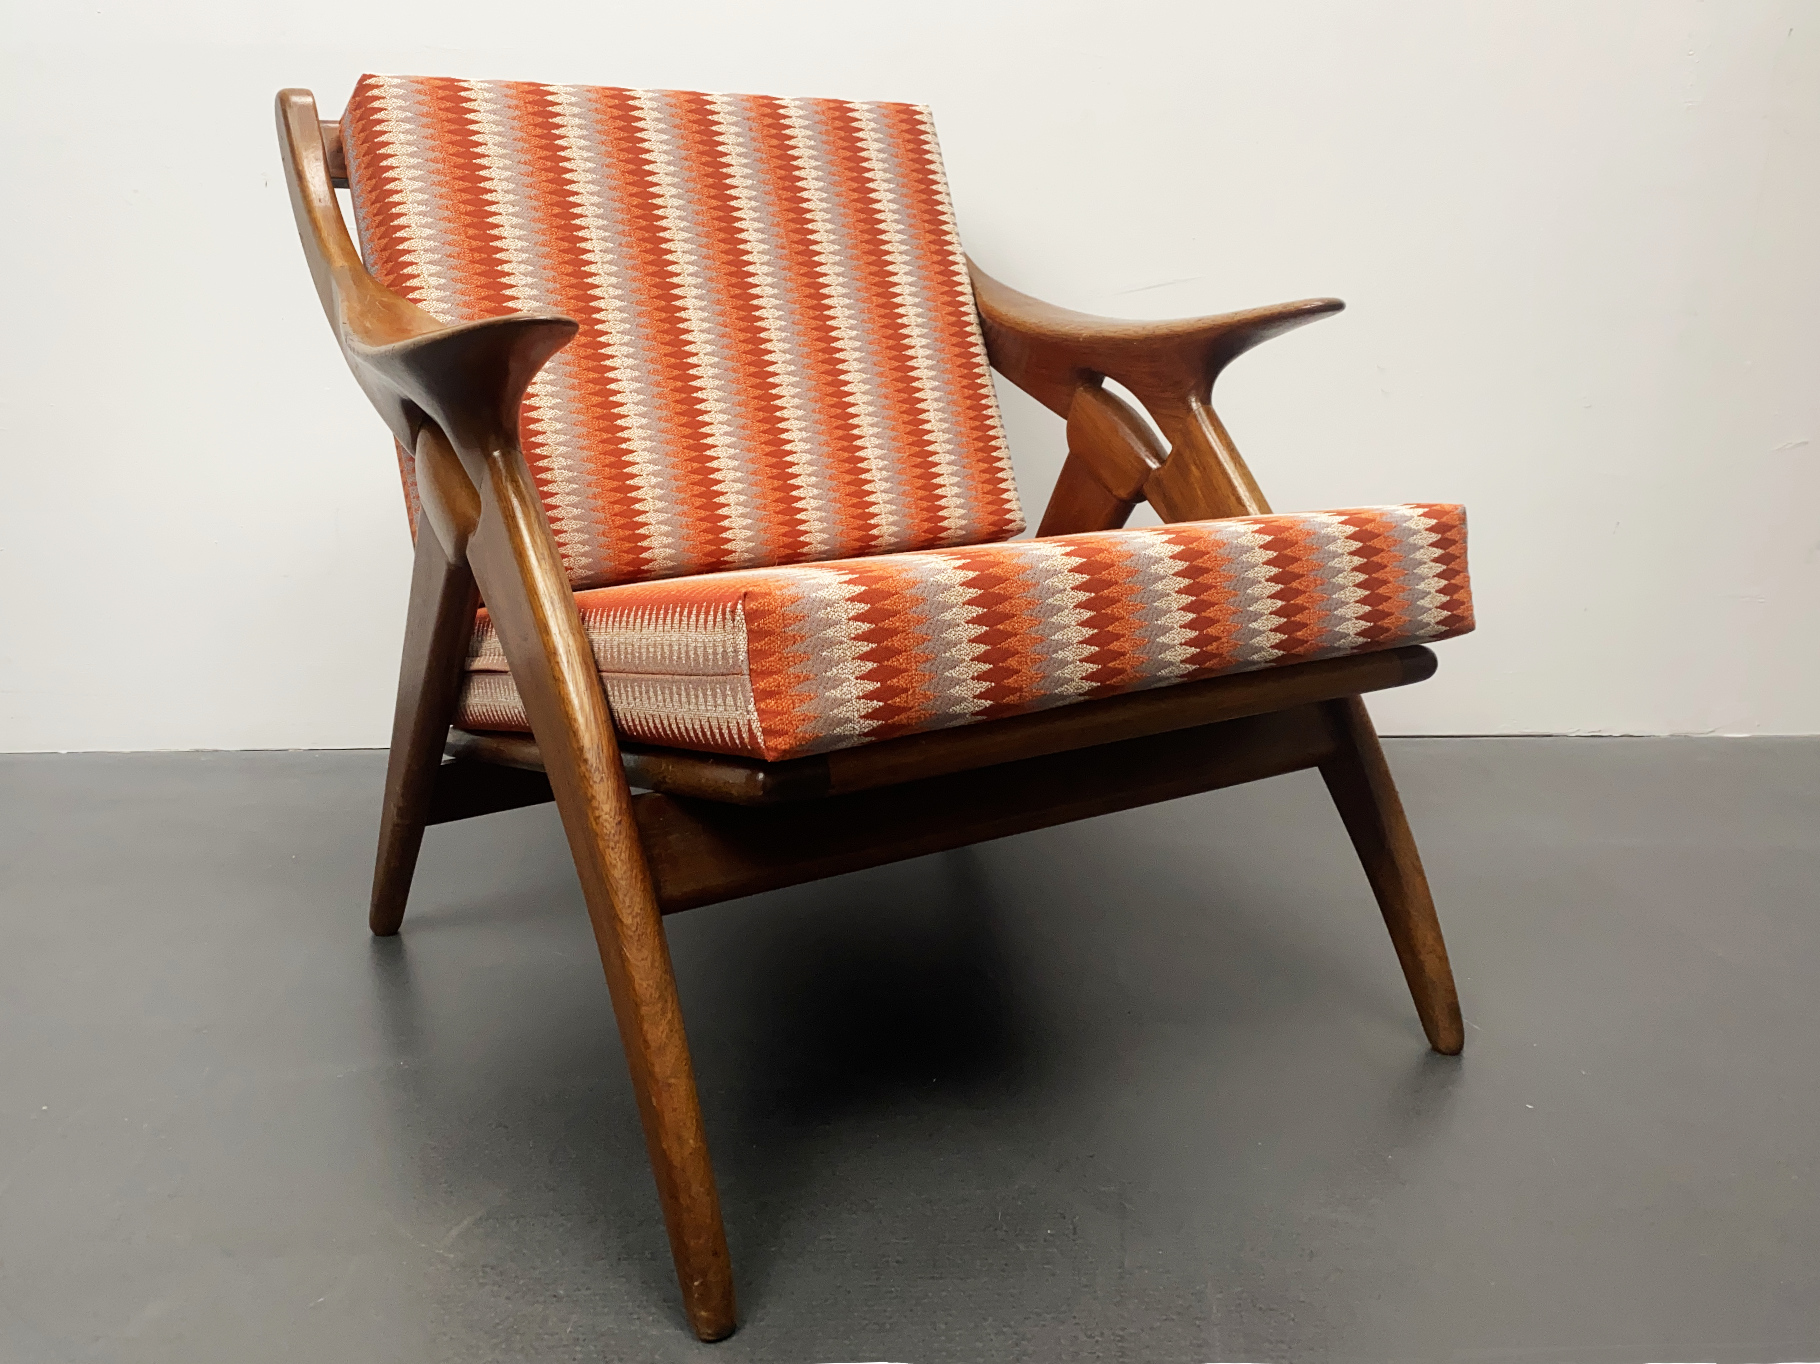 Armchair, Teak Wood, by De Ster Gelderland, Netherlands, 1960s. Upholstery and fabric have been renewed.